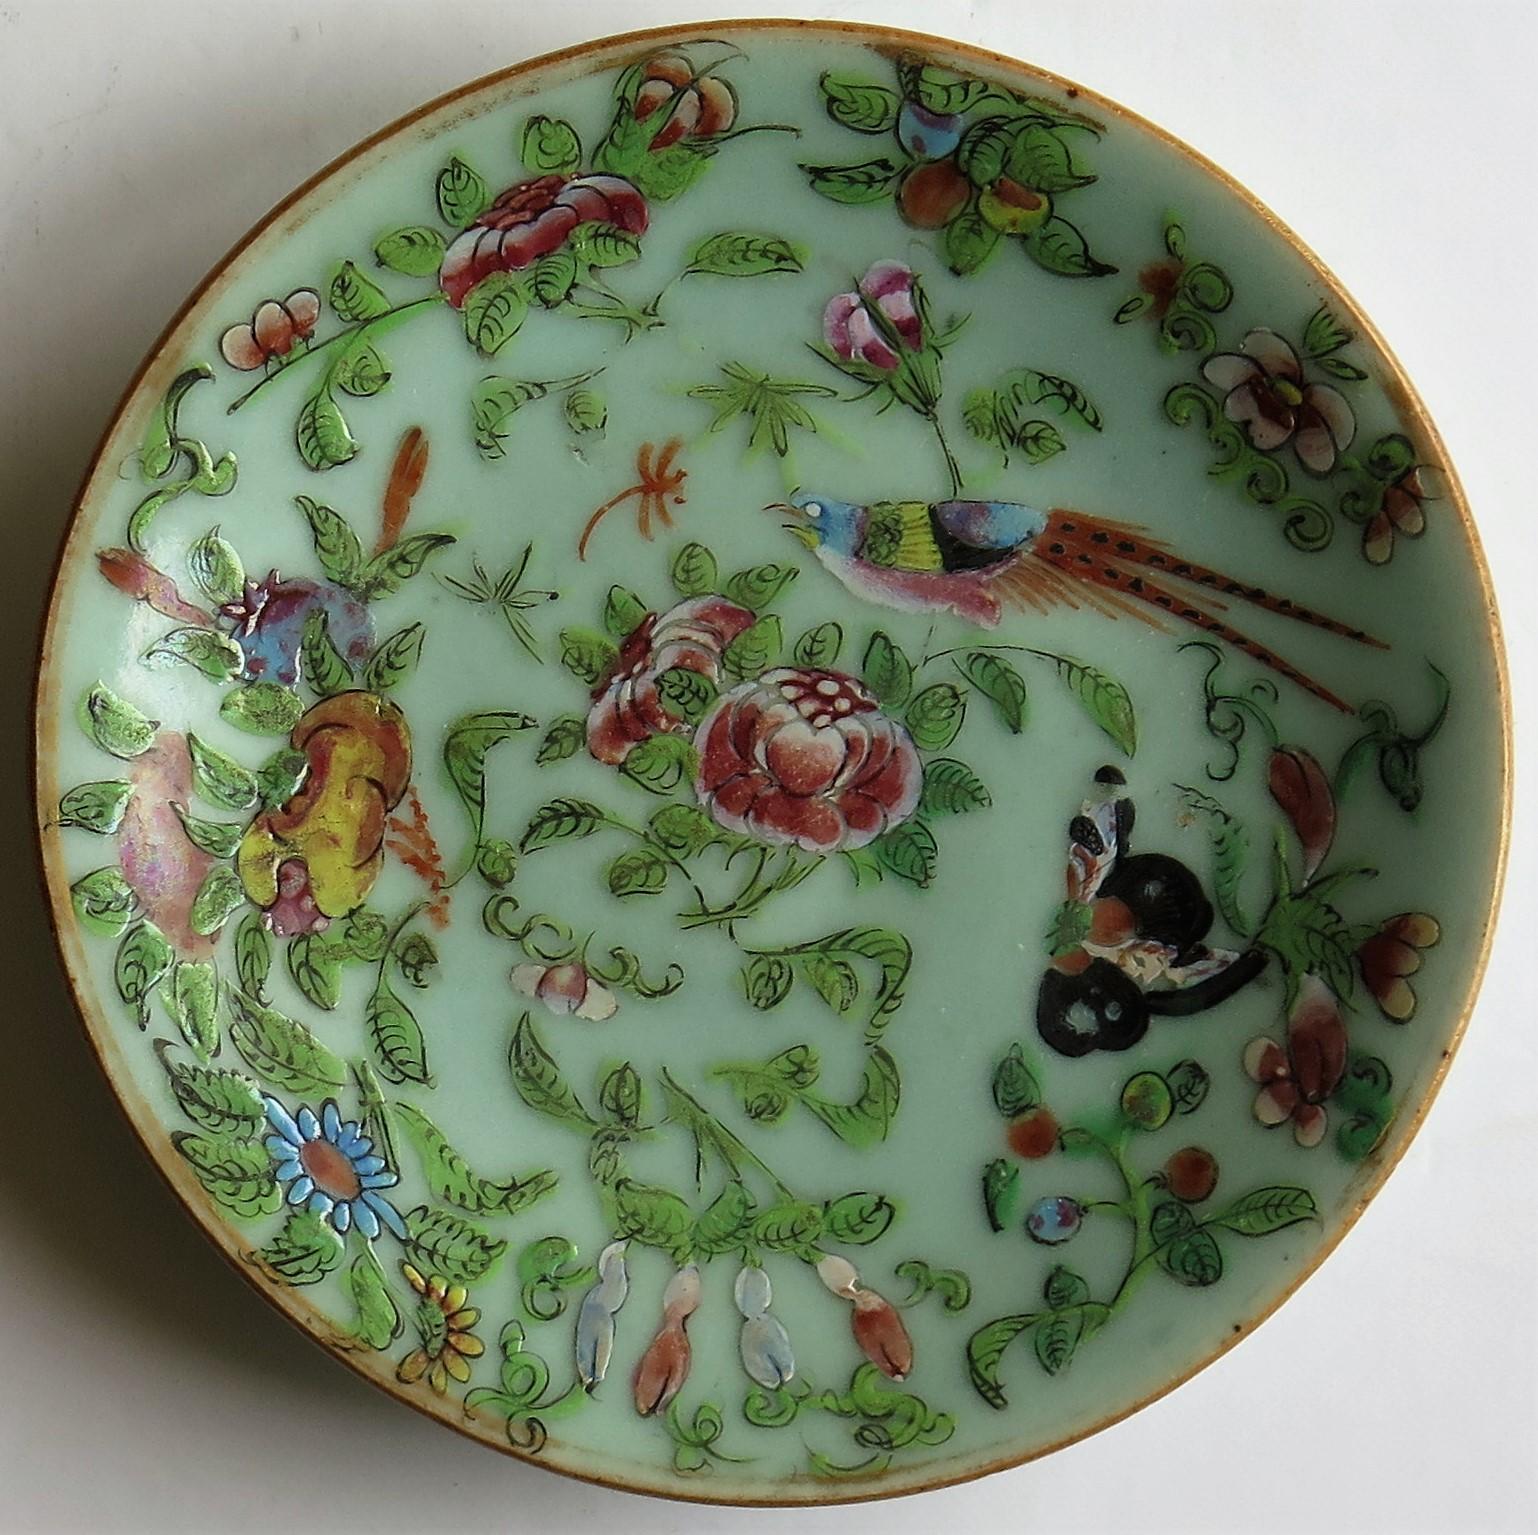 Famille Rose Antique Interiors Antique Chinese Plates Oriental Plates Celadon Plates Wall Plates Antique Canton Plates Home Decor